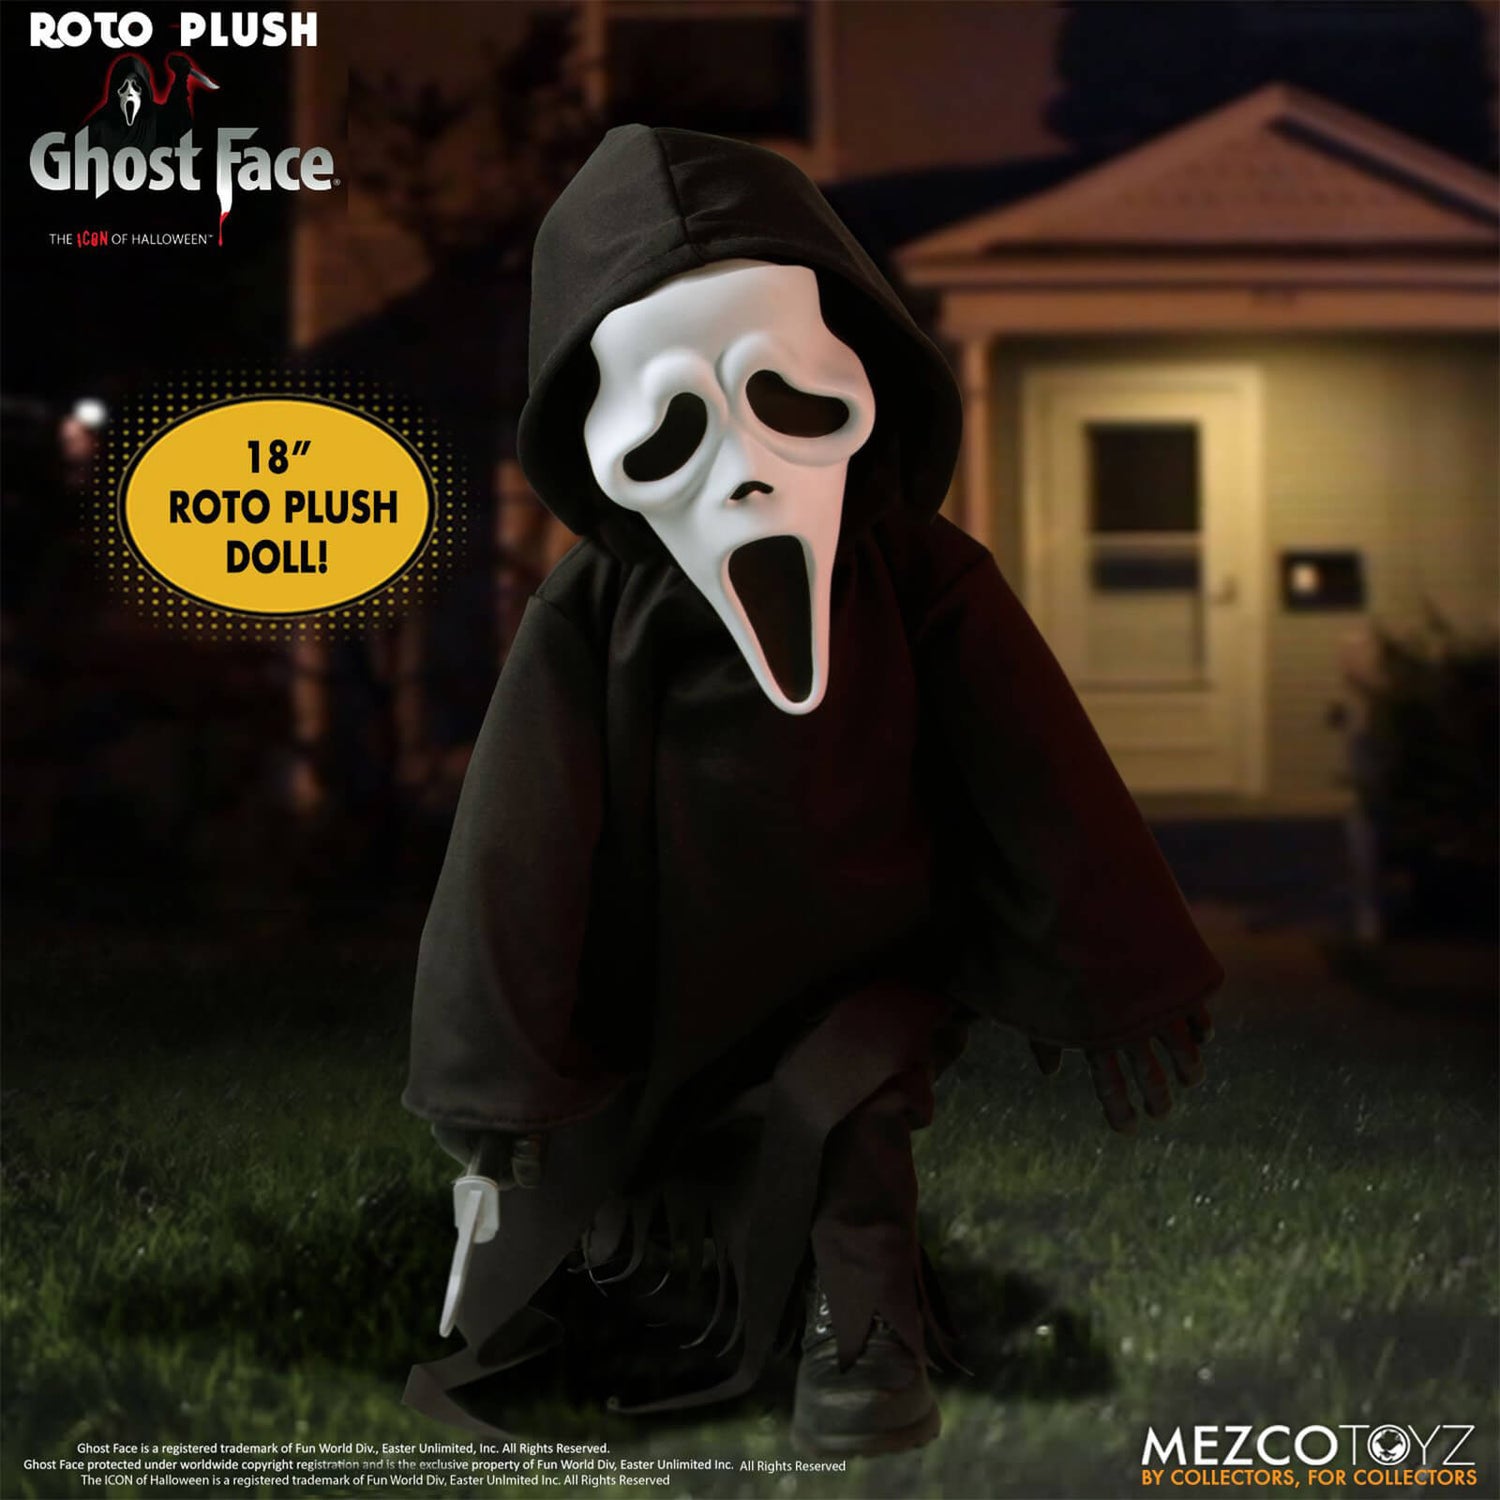 Mezco Scream Ghost Face MDS 120 cm Roto Plüschfigur